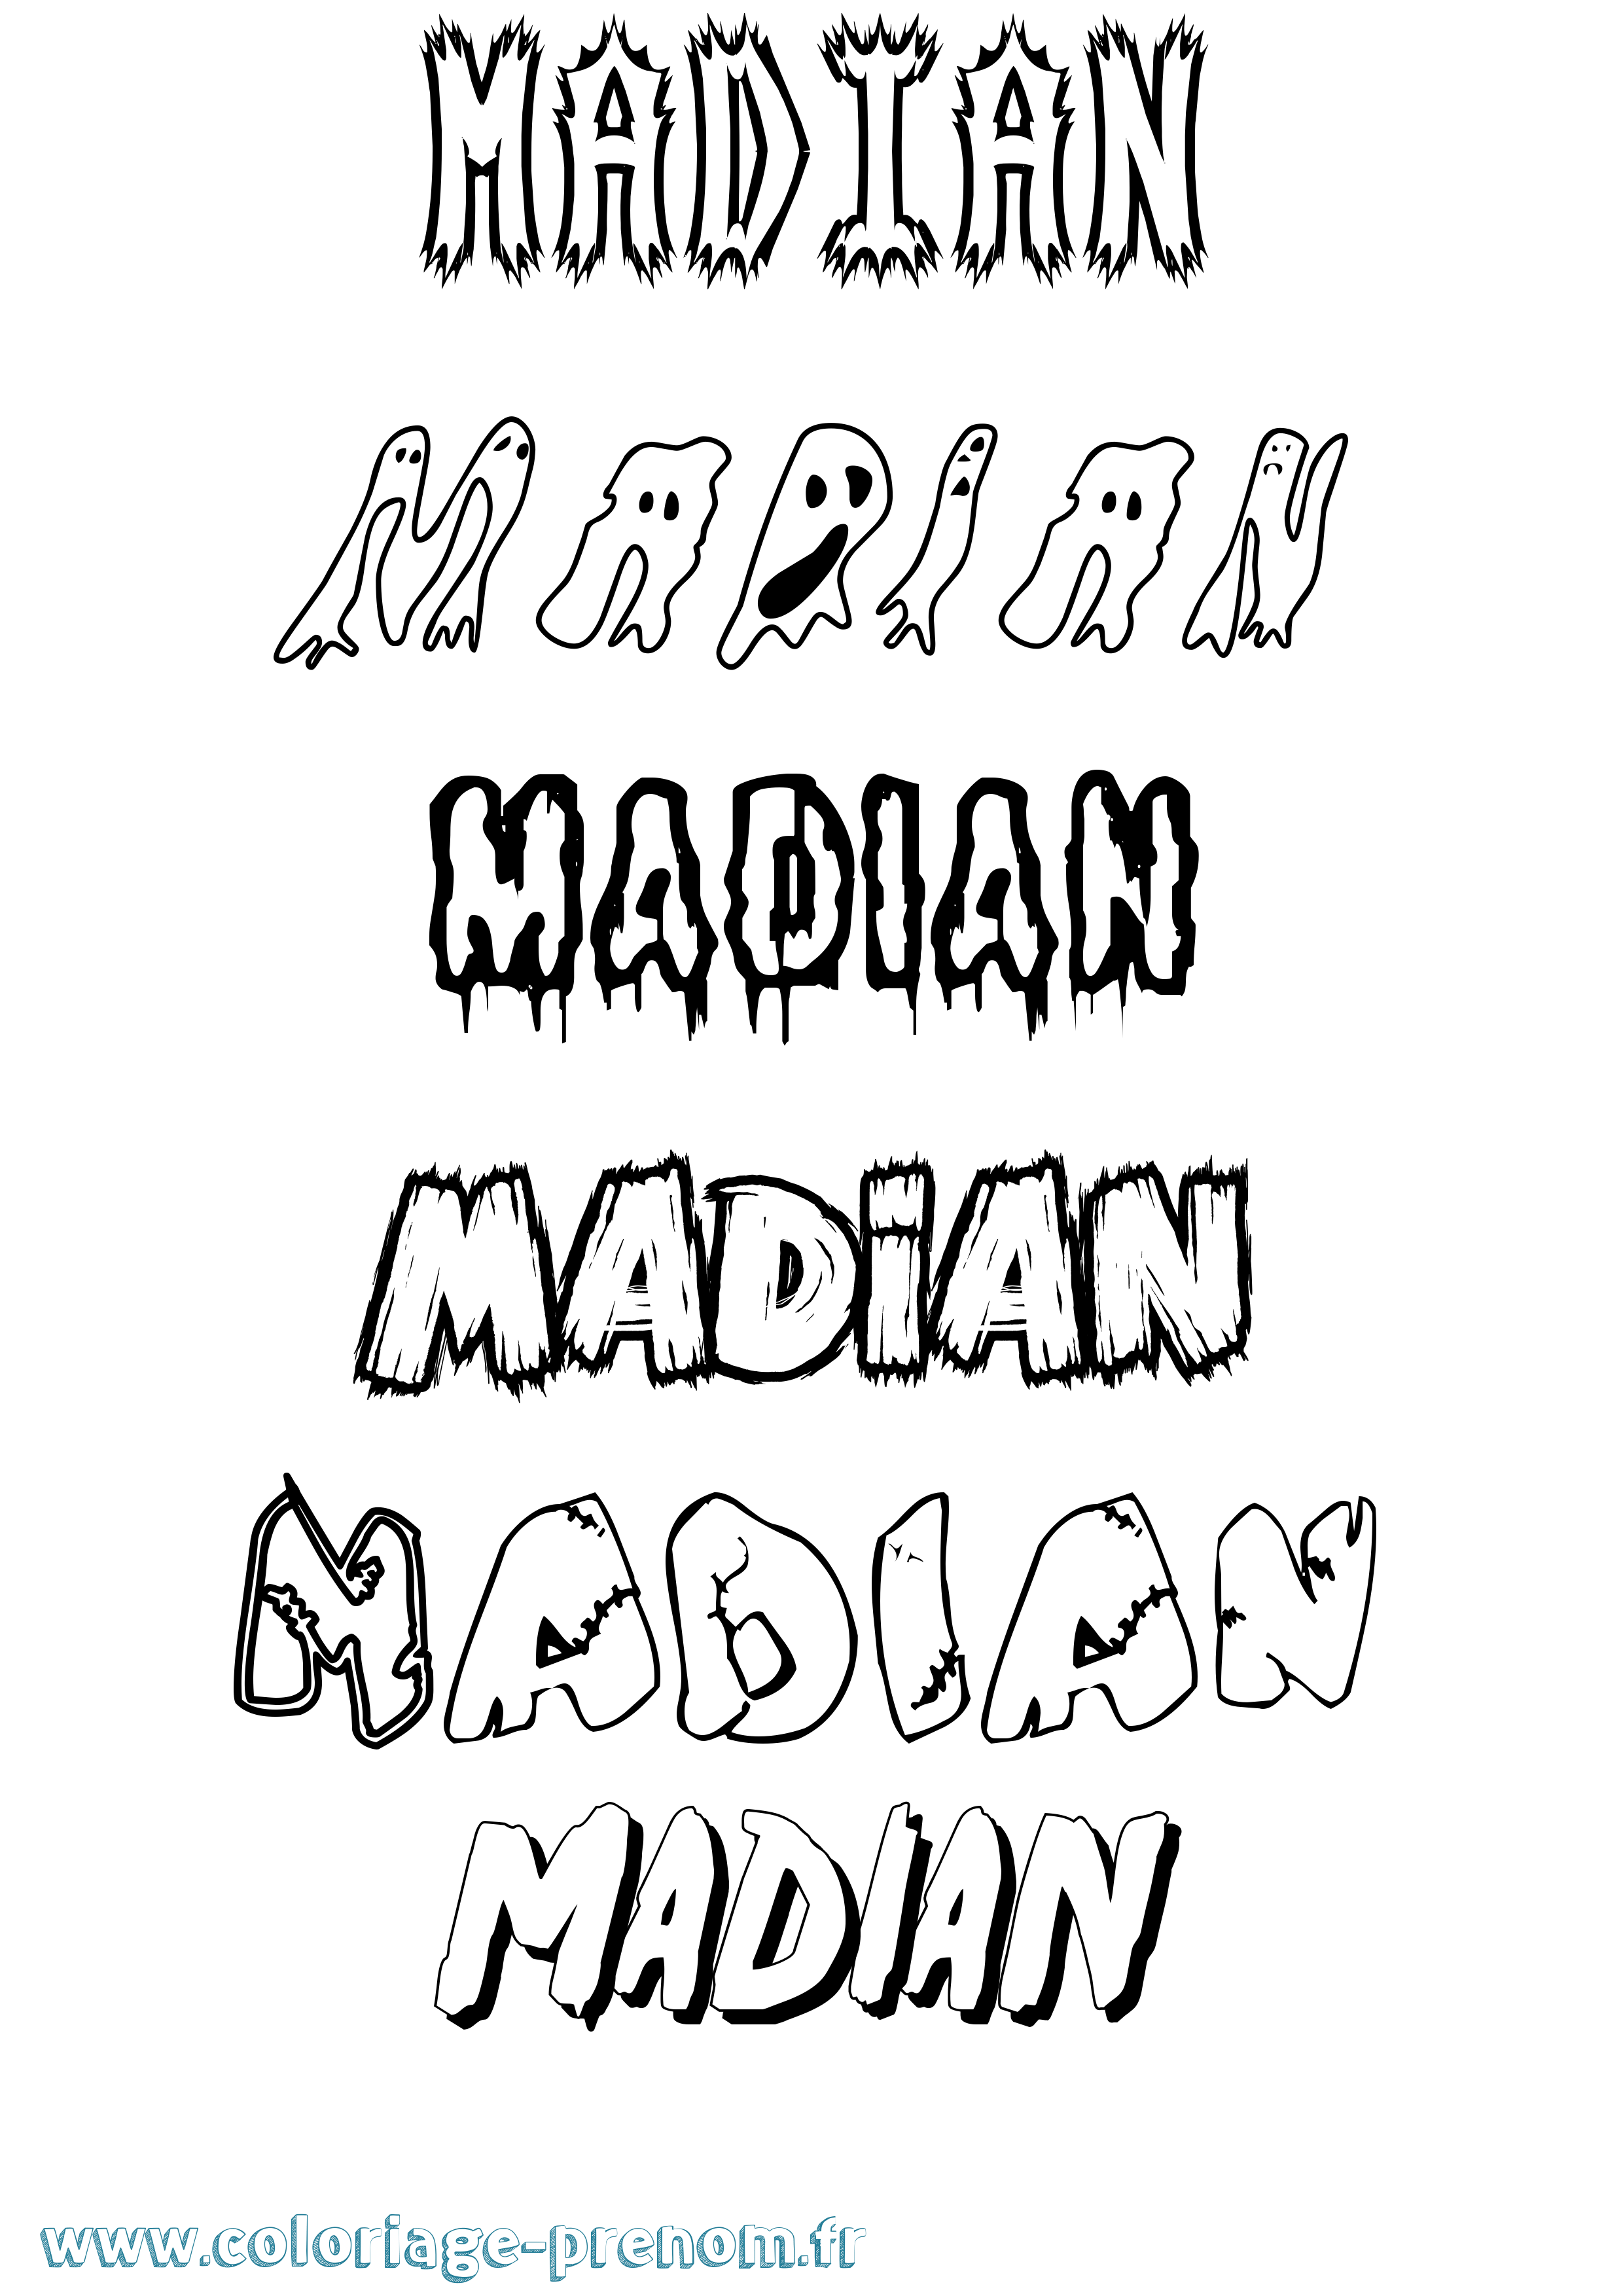 Coloriage prénom Madian Frisson